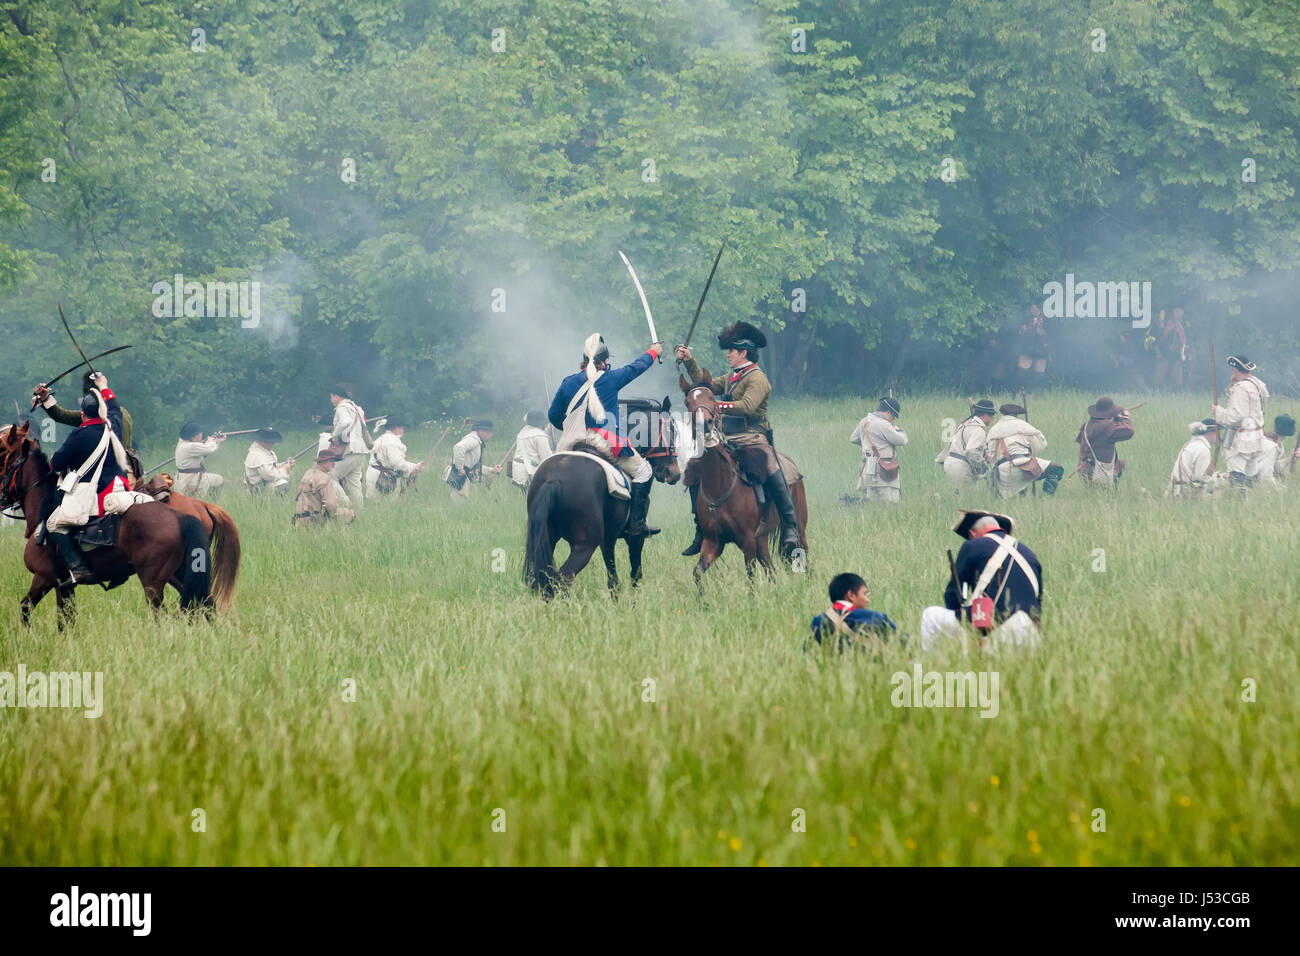 Guerra rivoluzionaria re-enactors a cavallo - USA Foto Stock